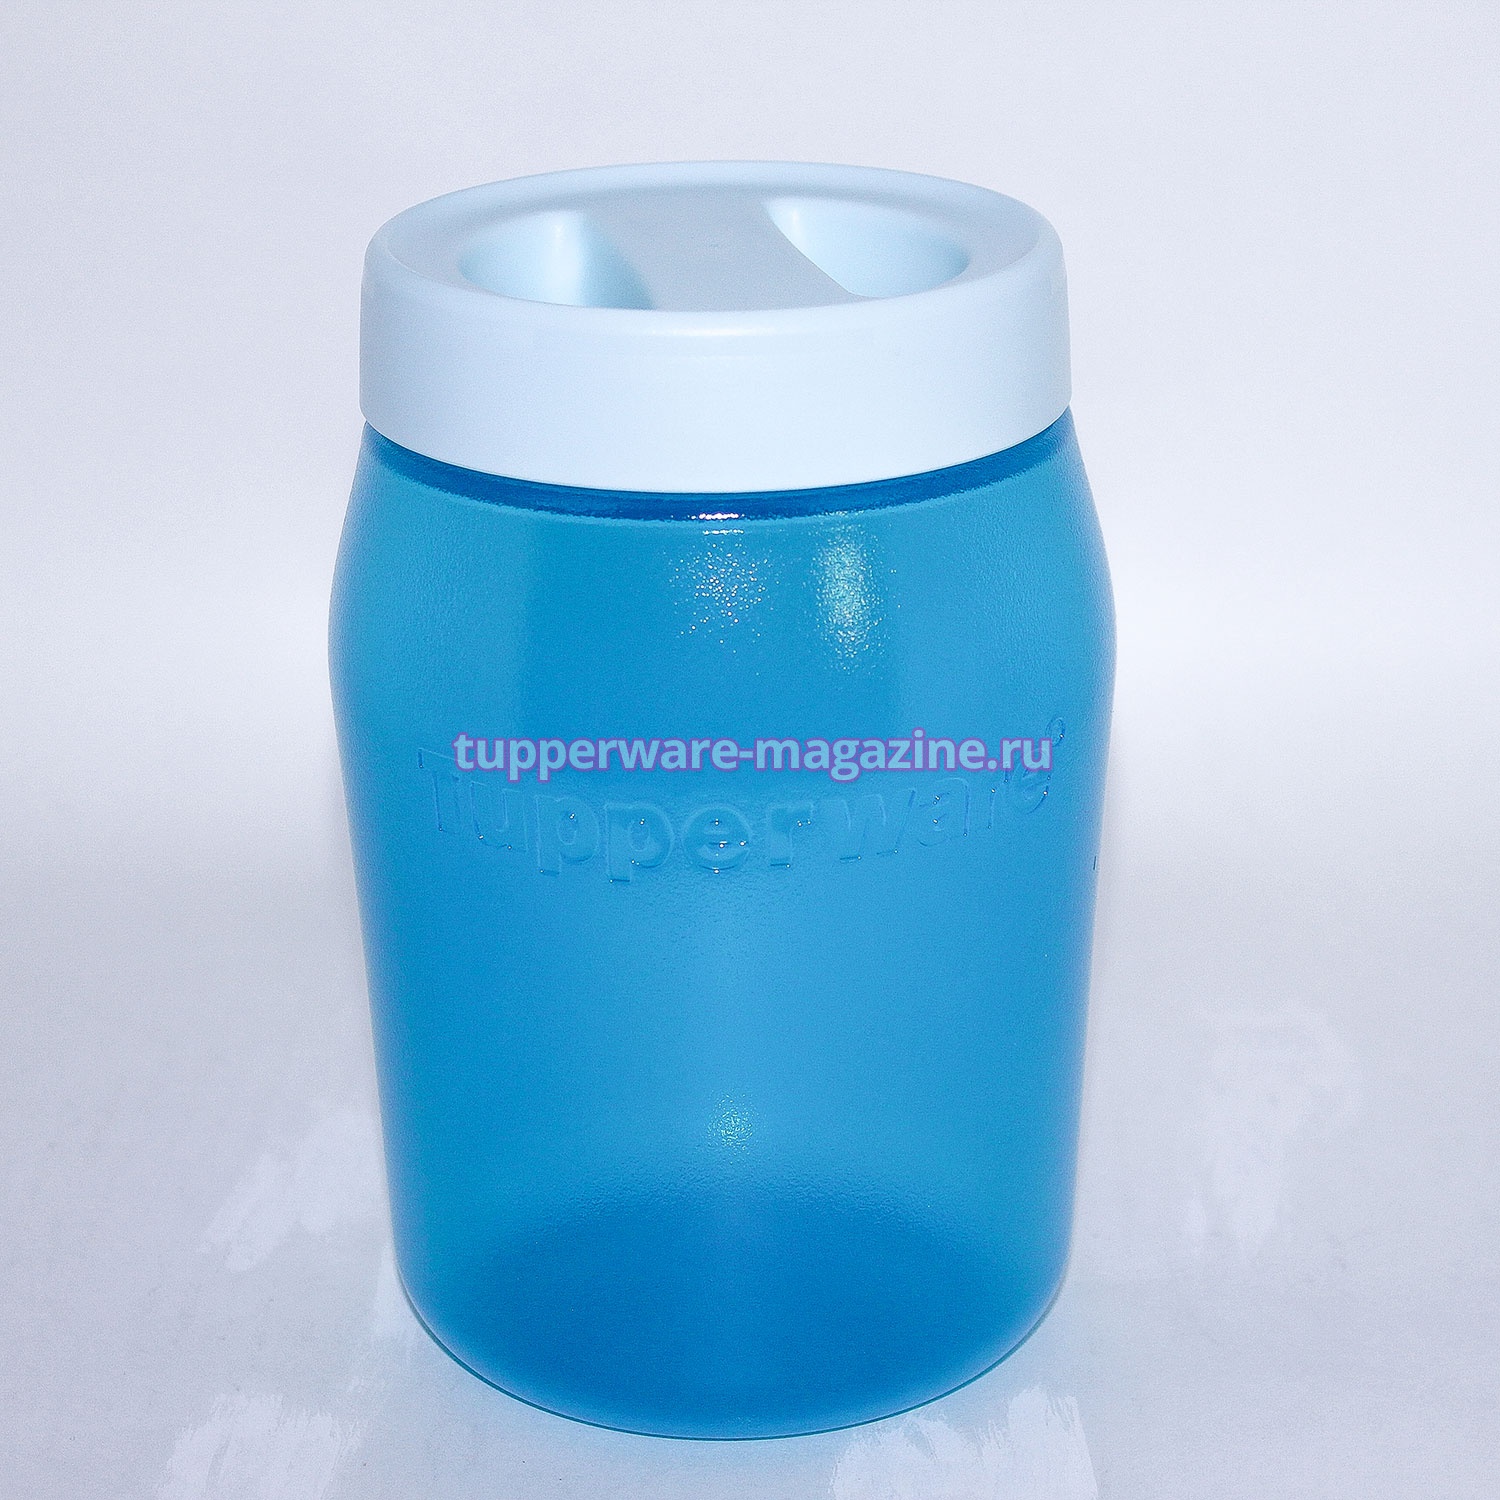 Чудо-банка Tupperware 1,5 л в голубом цвете